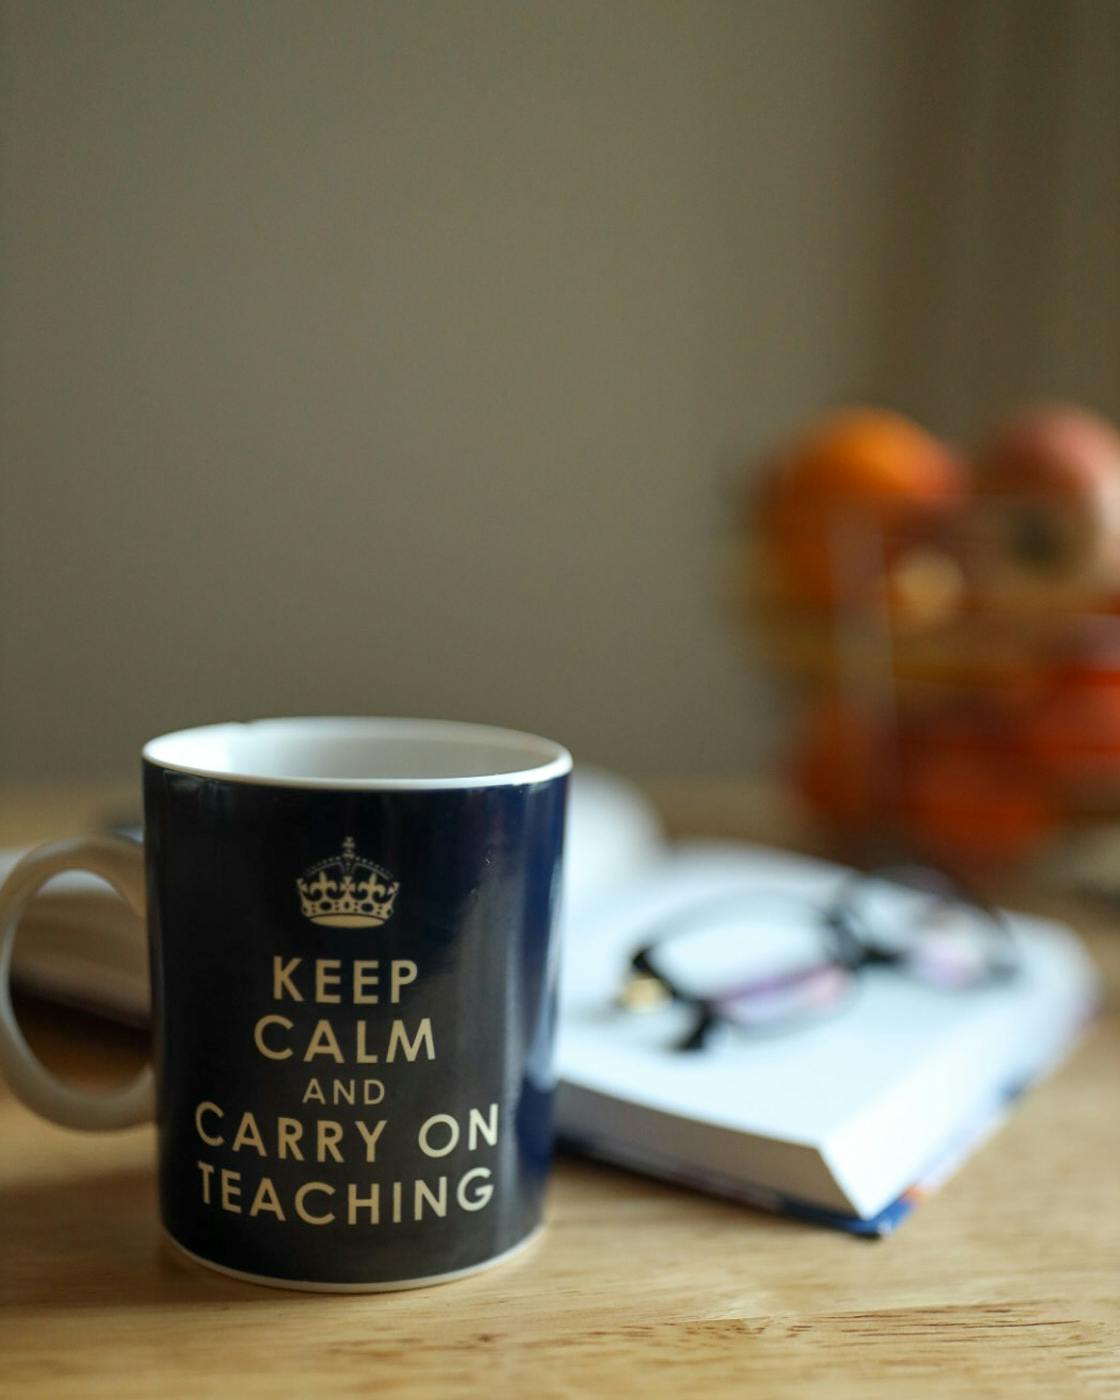  coffee mug with Keep Calm and Carry On Teaching on it